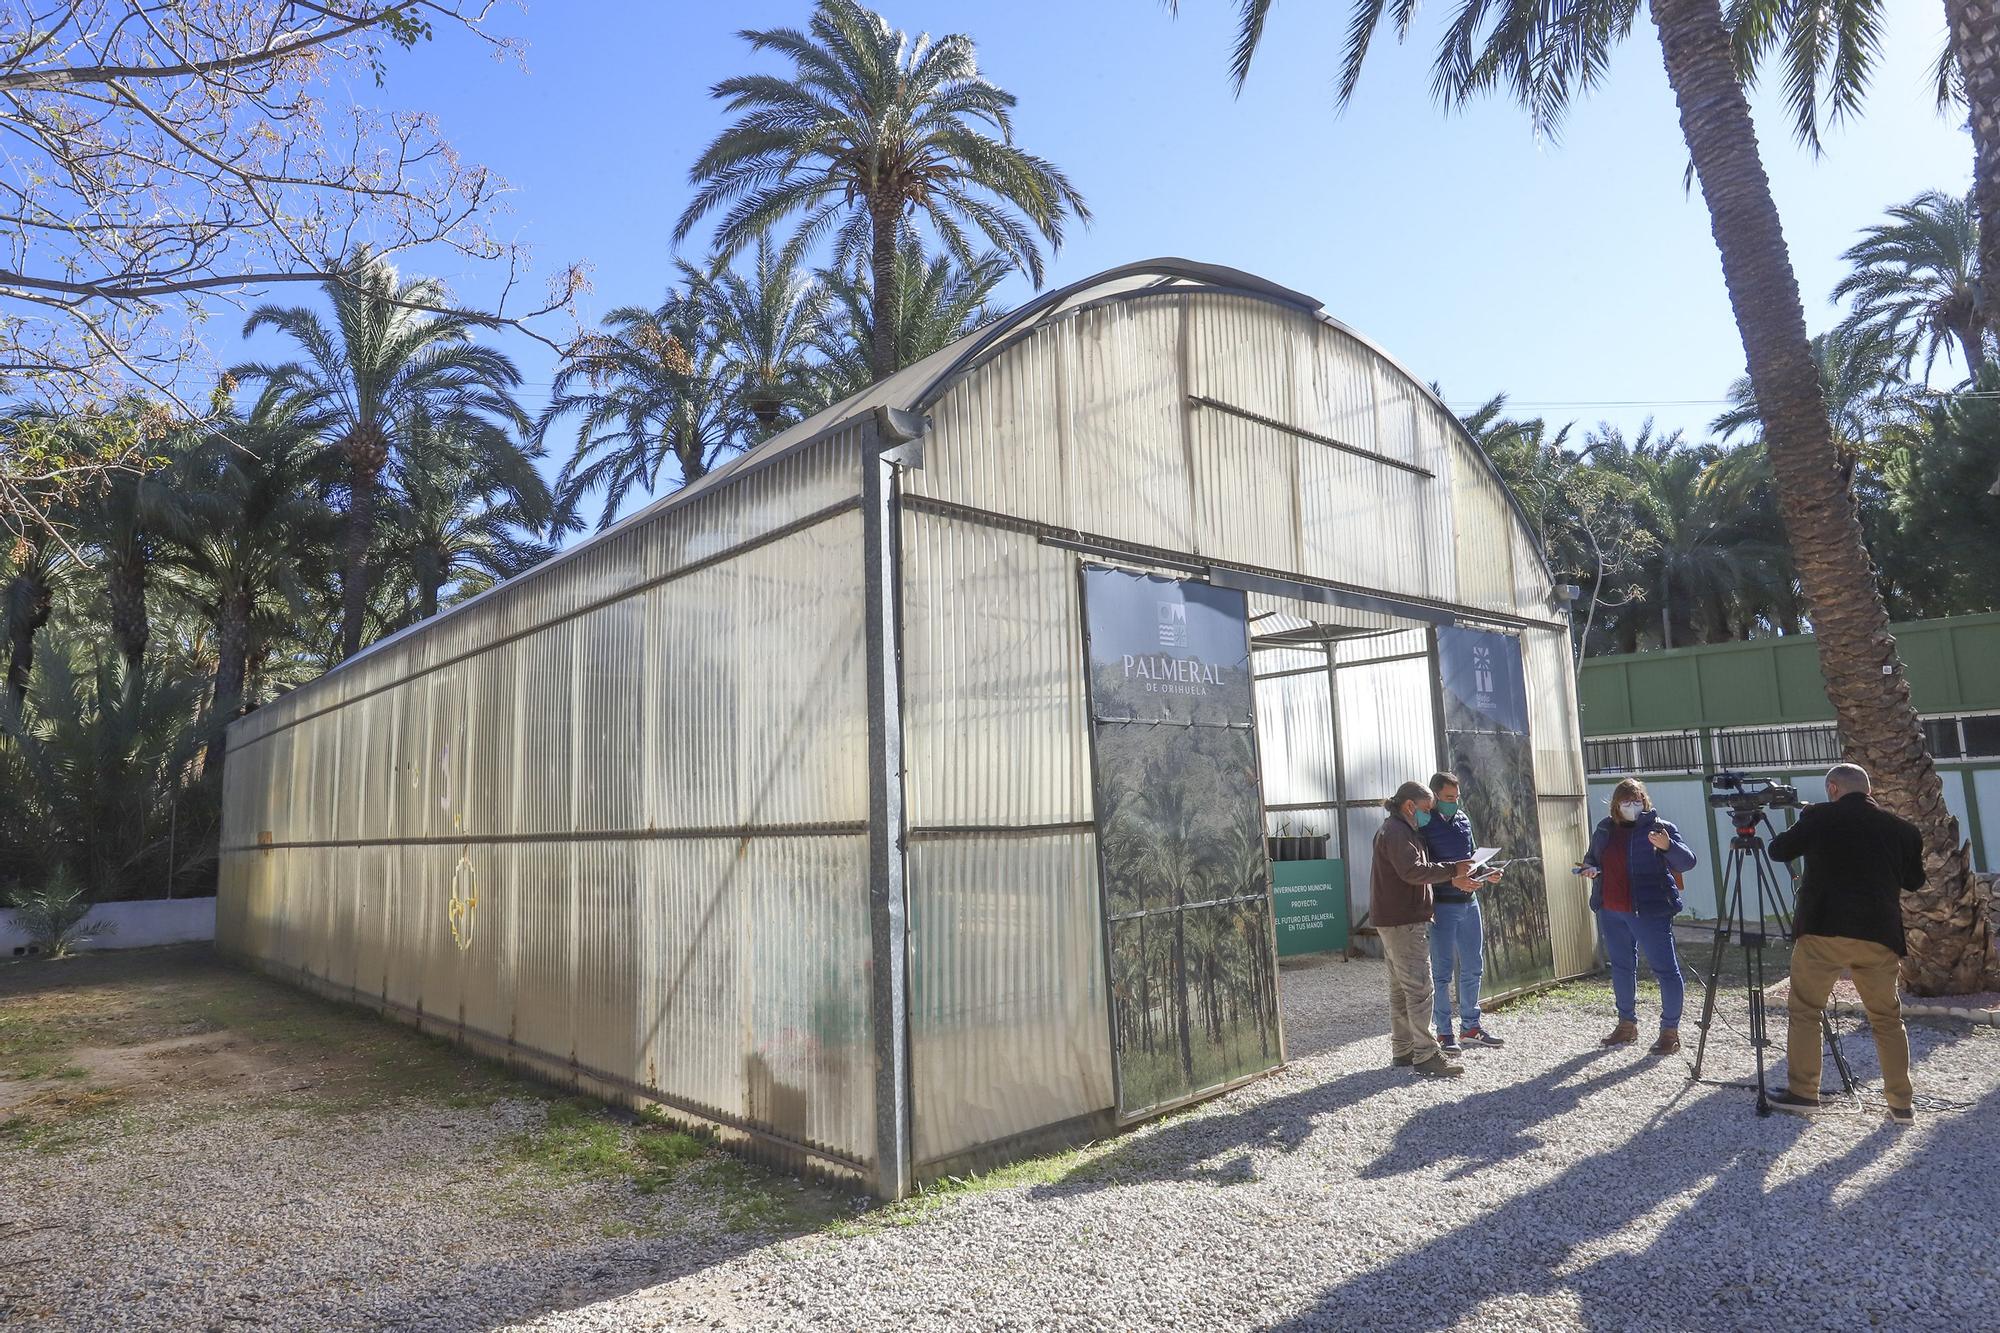 Visit of the councilor Dámaso Aparicio to the Orihuela Palm Grove greenhouse